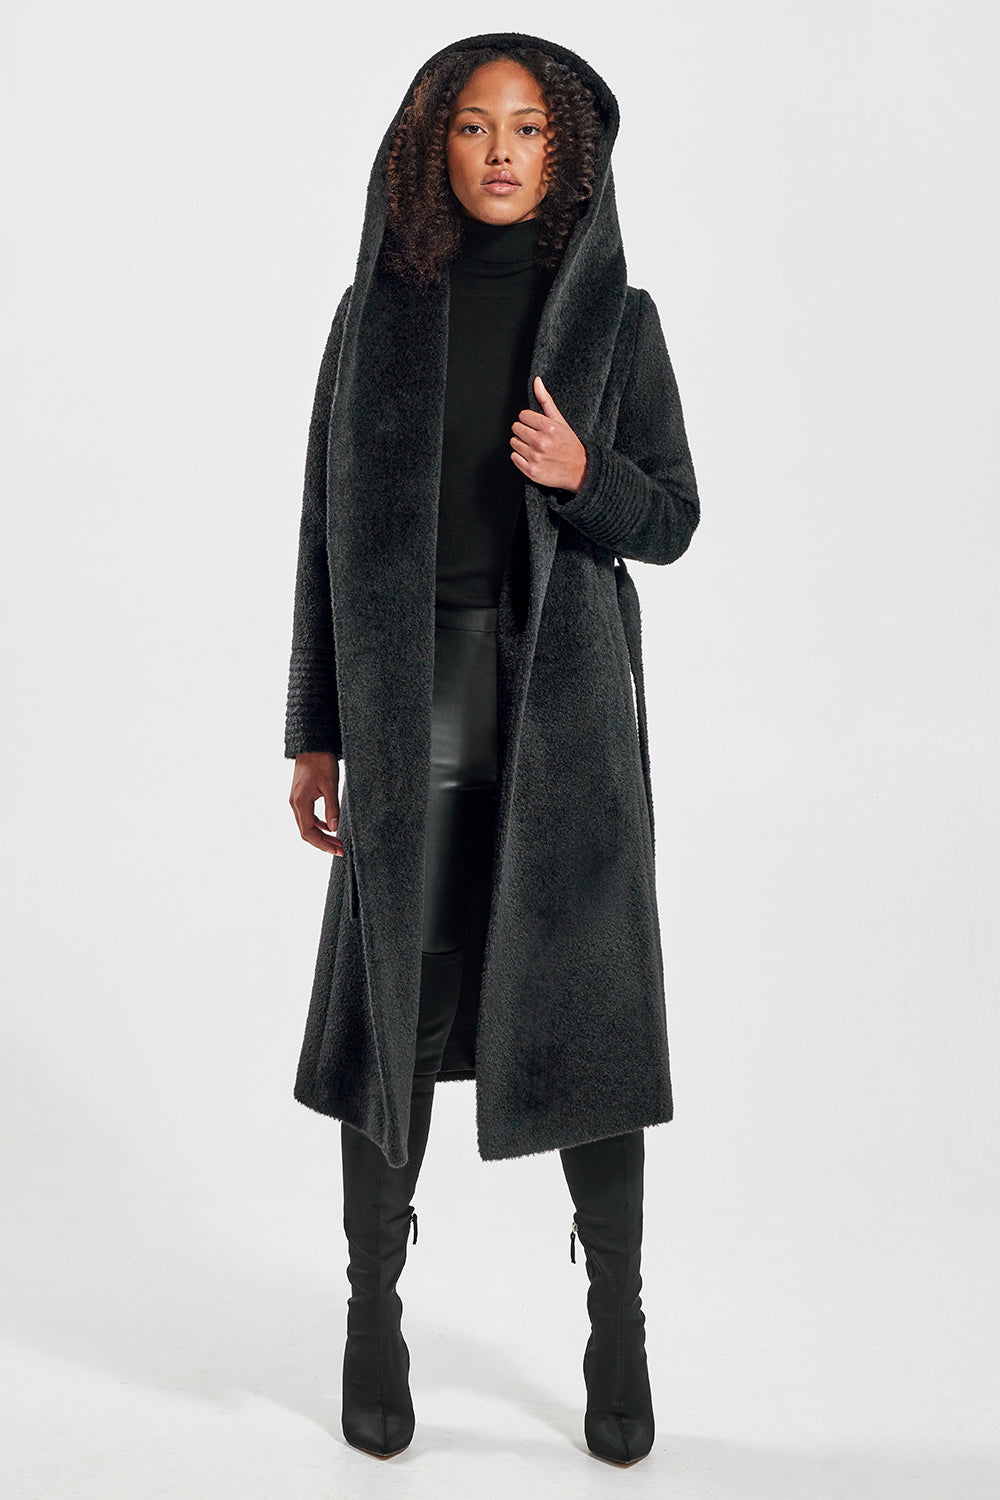 Bouclé Alpaca Long Hooded Wrap Black Coat